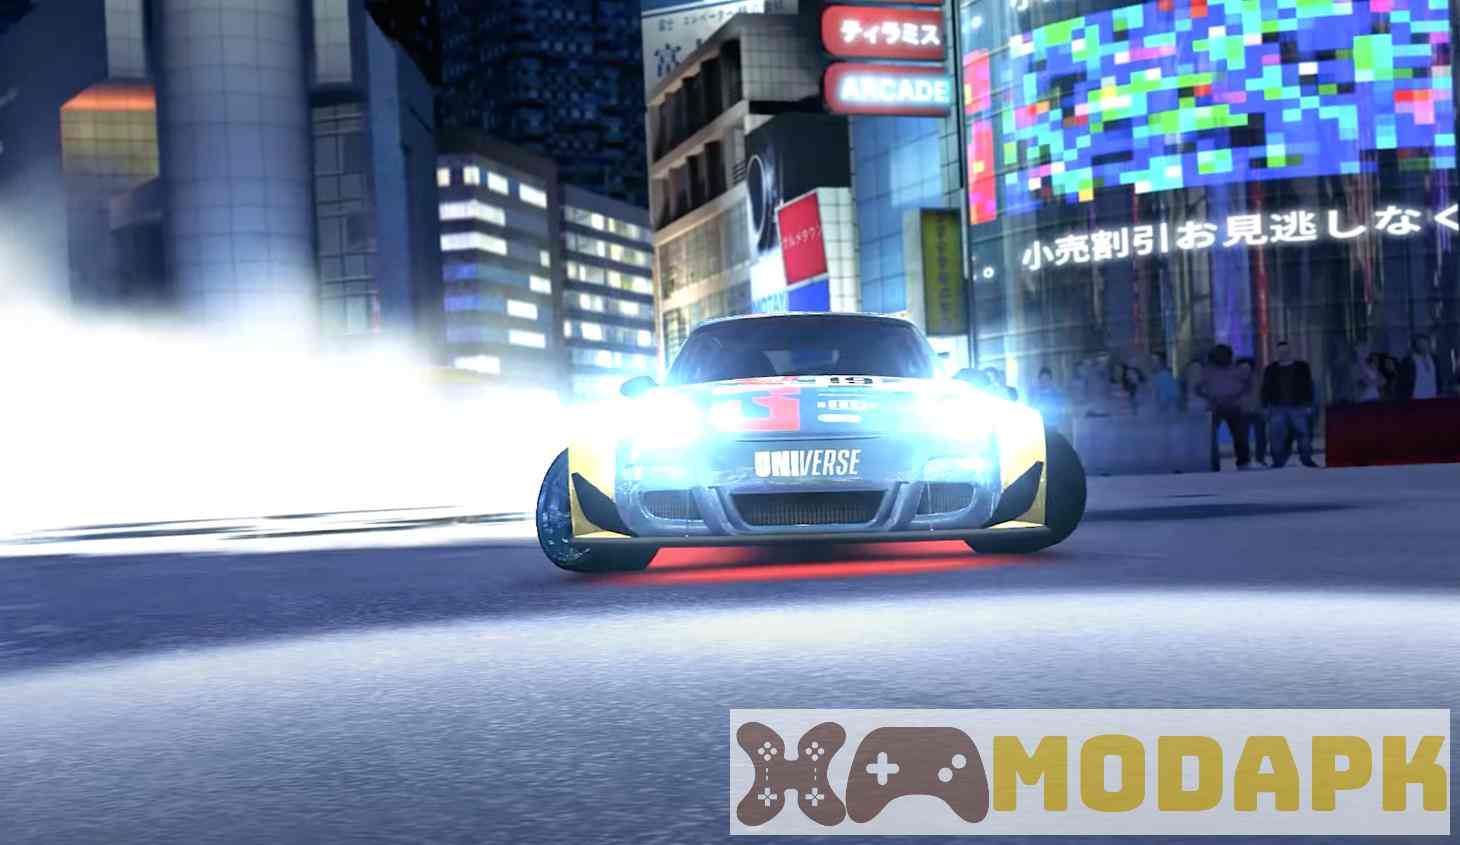 Drift Max Pro Car Racing Game MOD APK (Infinite Money, Full Vehicles) 2.5.57